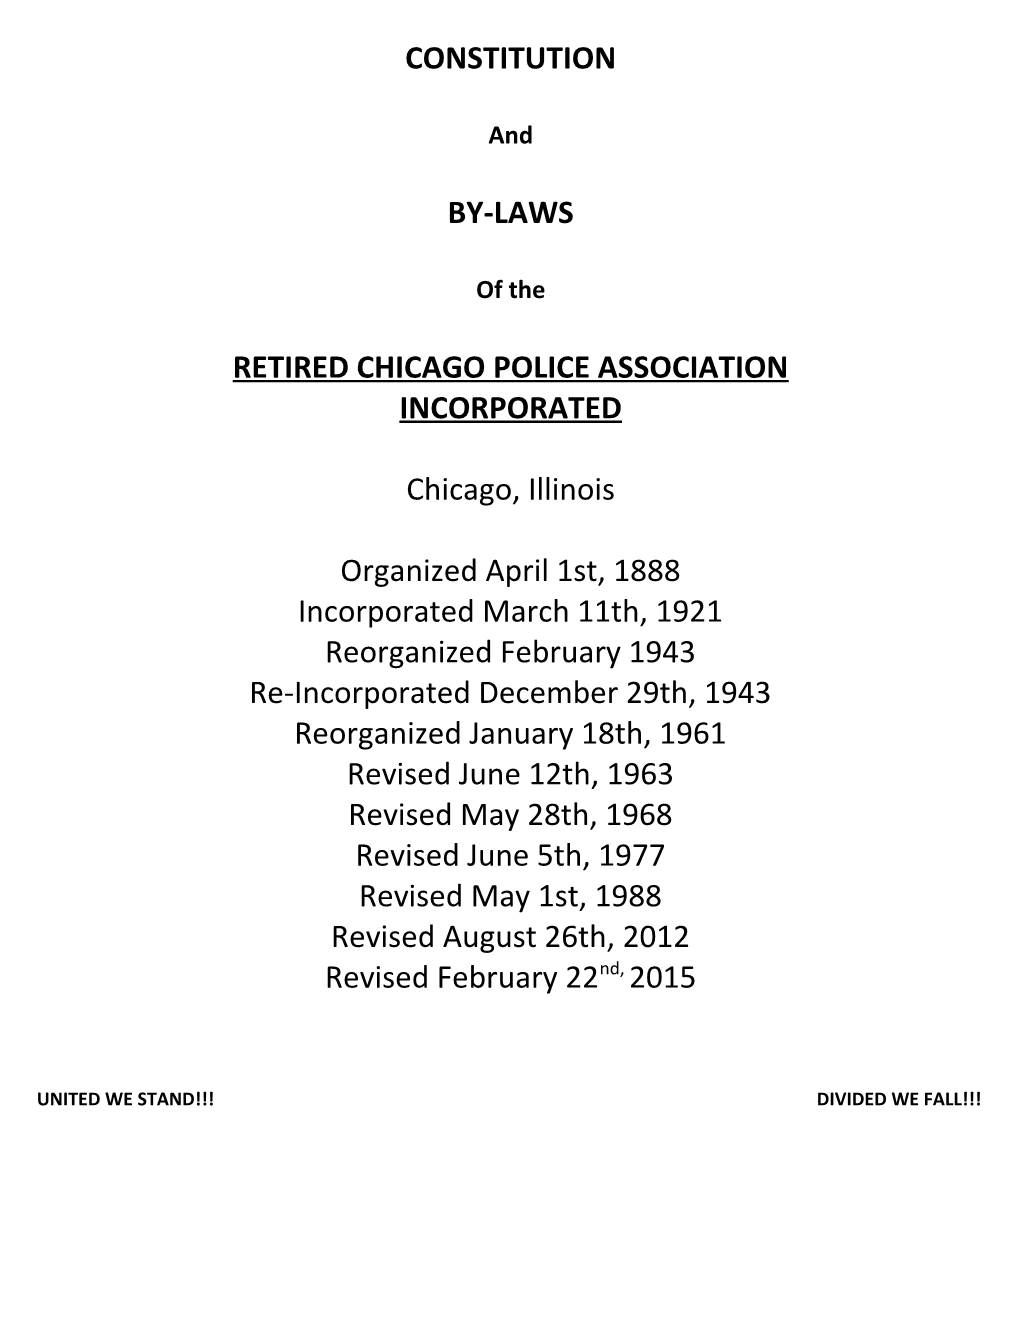 Retired Chicago Police Association